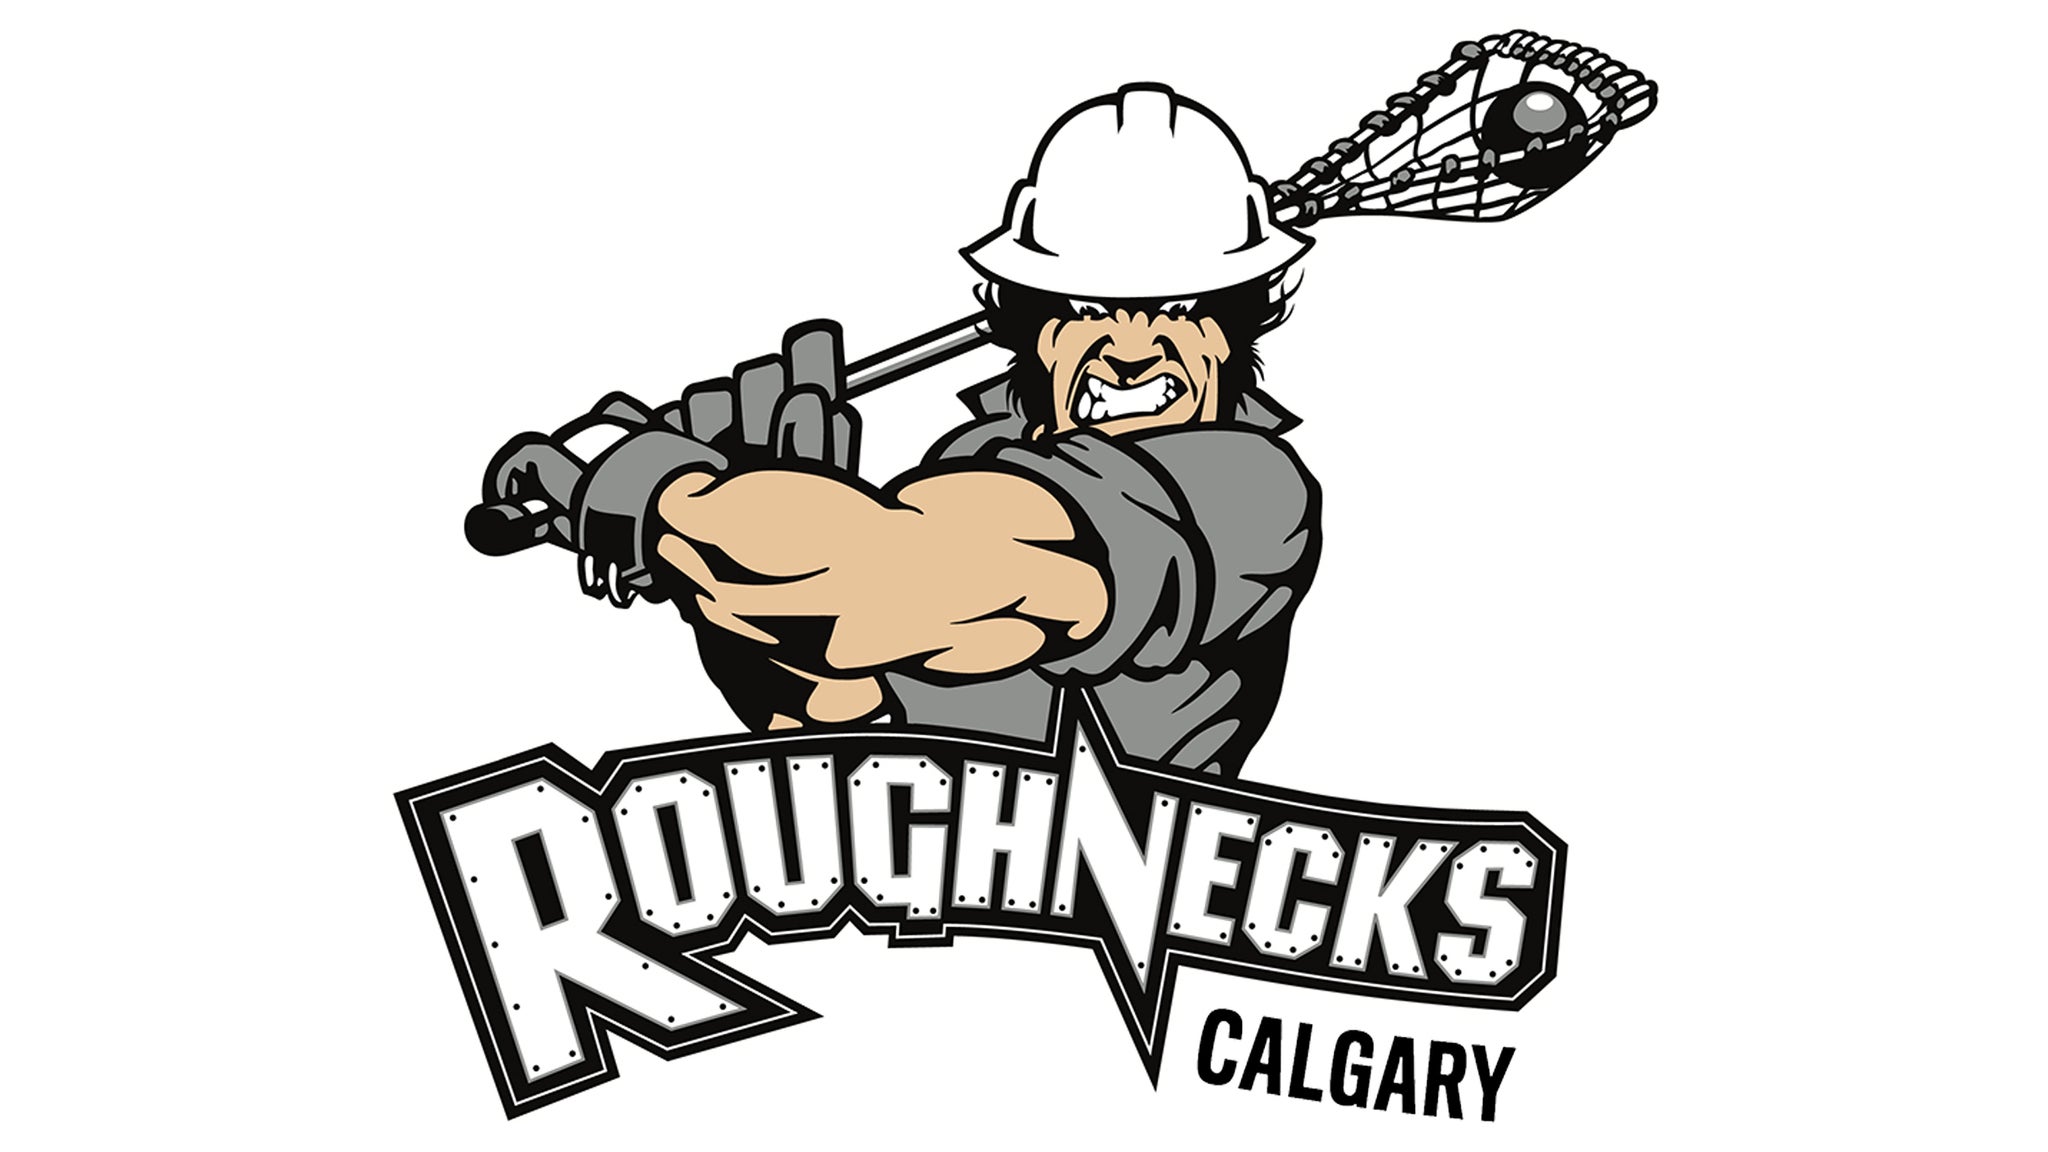 Calgary Roughnecks vs. Colorado Mammoth in Calgary promo photo for Offer presale offer code